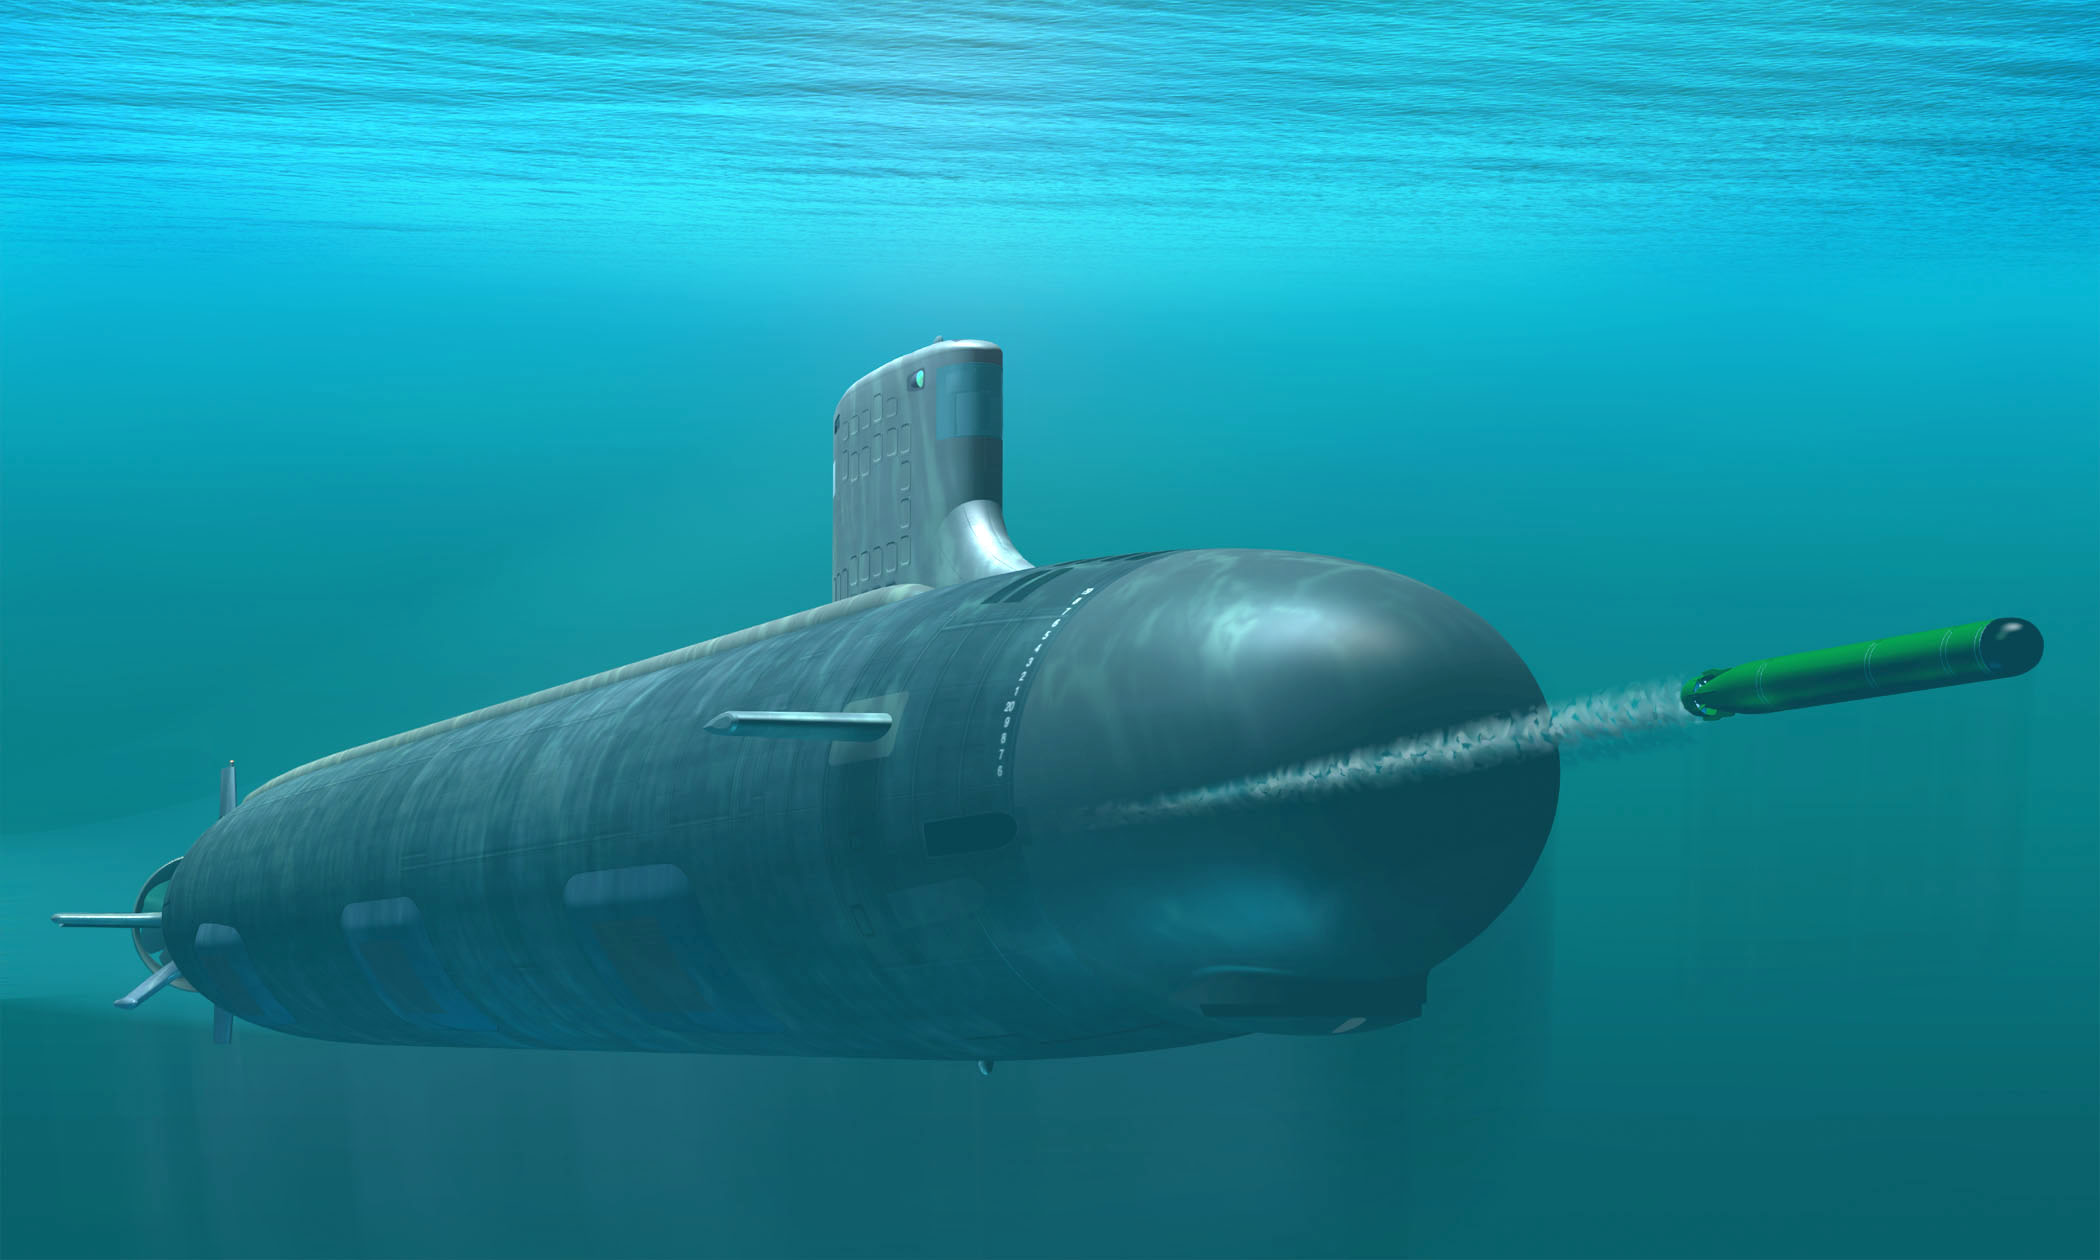 Concept Art For Virginia Class Submarine